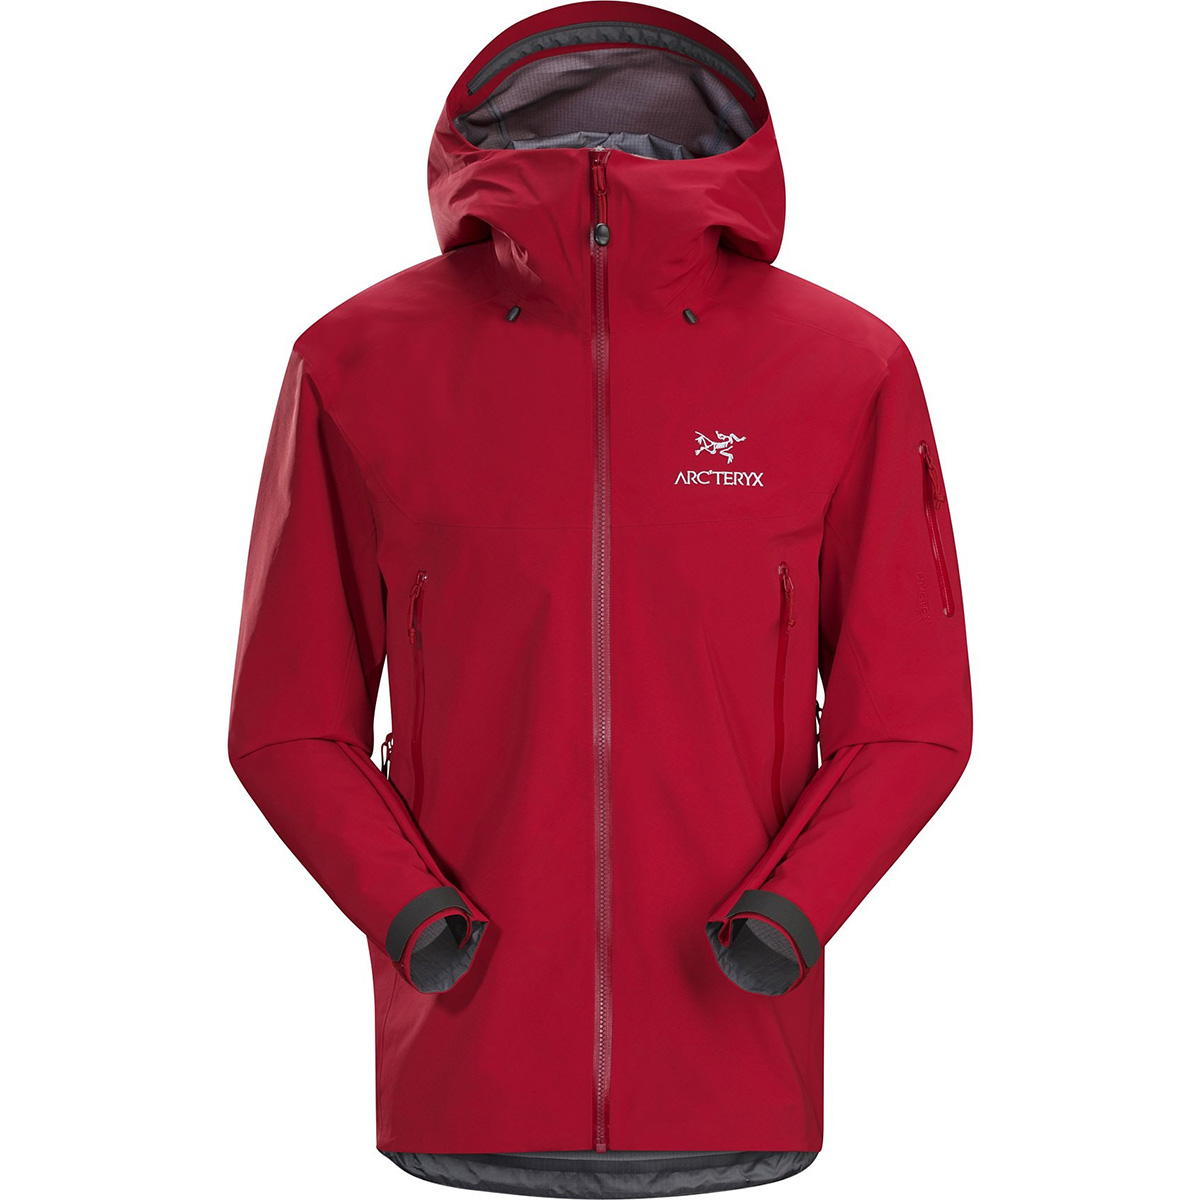 Arc'teryx Beta SV Jacket, men's, discontinued Spring 2019 colors 